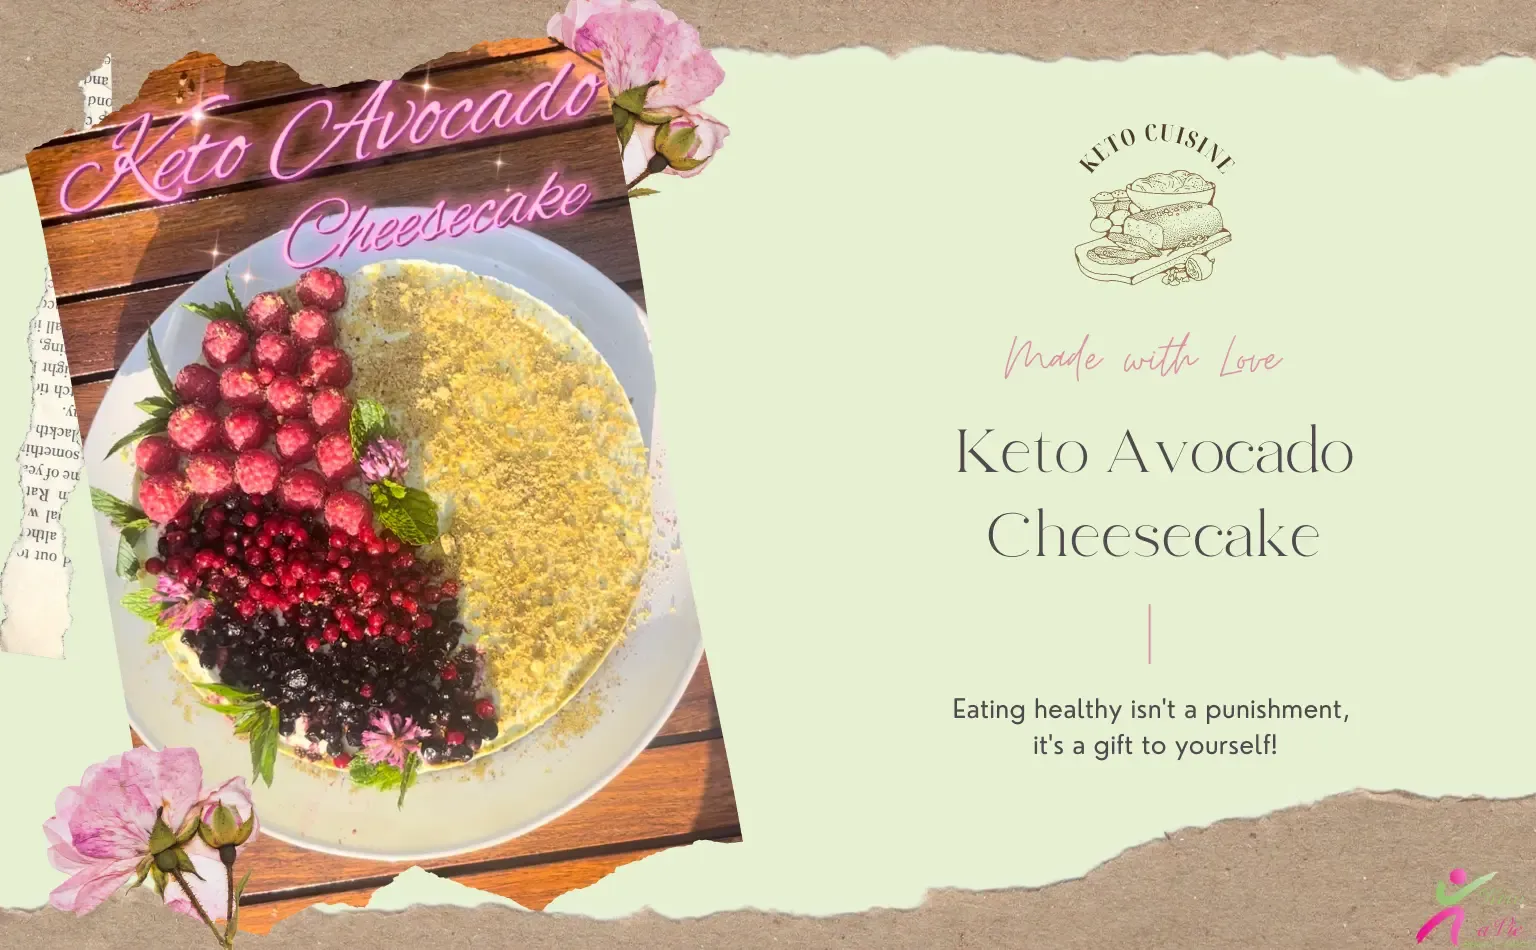 Delicious Creamy Keto Avocado Cheesecake with Pistachio-Almond Crust